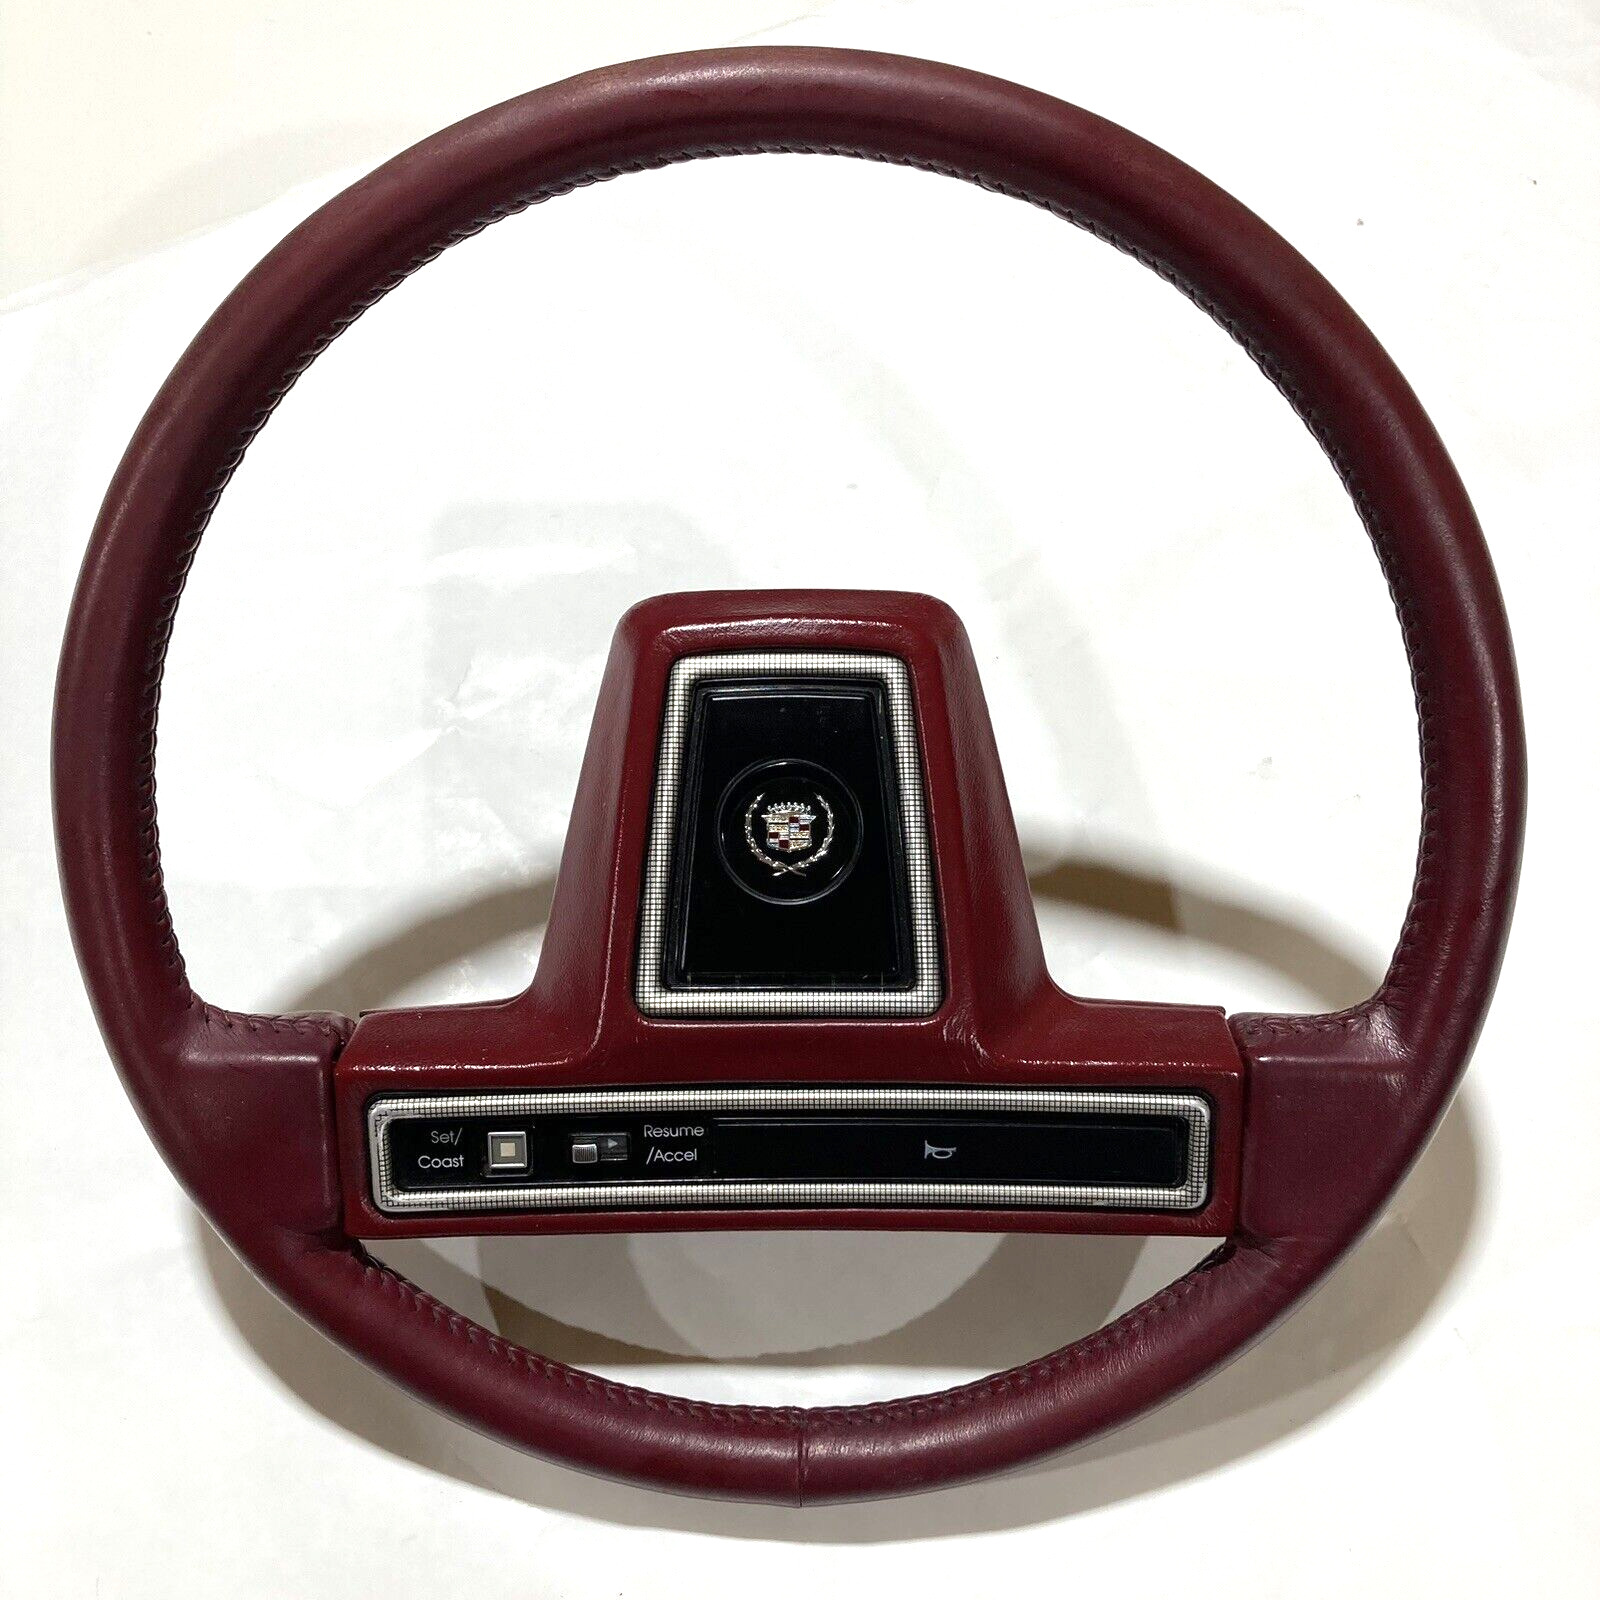 1985-1989 Cadillac Eldorado (Seville) steering wheel with cruise control